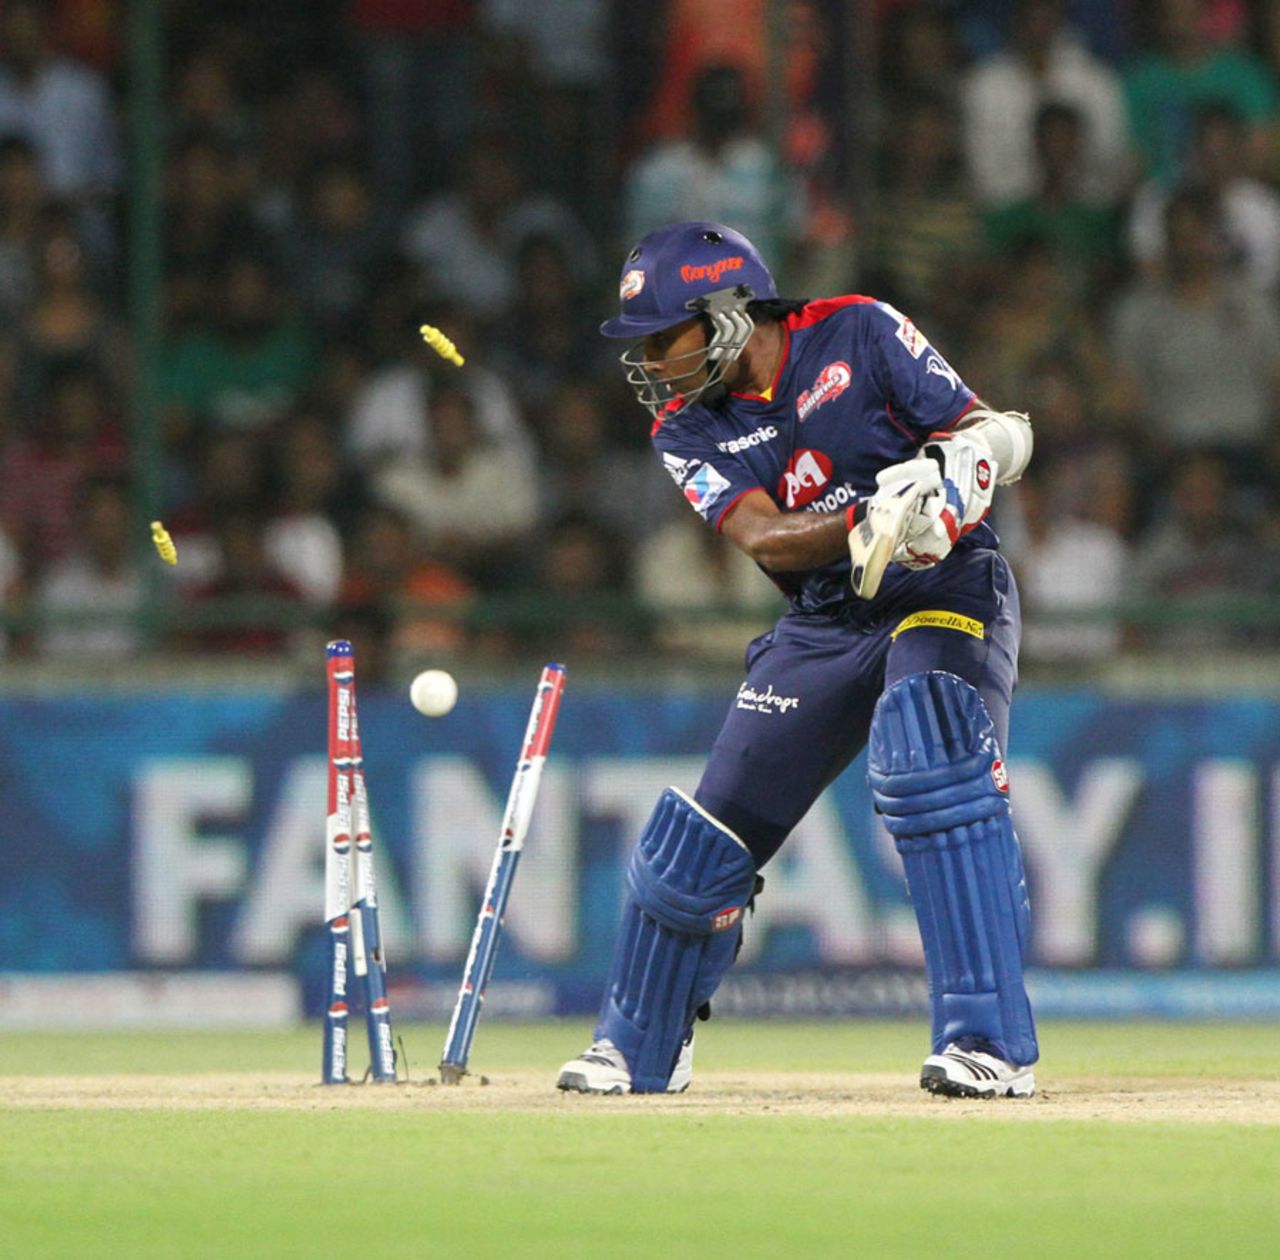 Mahela Jayawardene was bowled by Jaydev Unadkat for 19, Delhi Daredevils v Royal Challengers Bangalore, IPL 2013, Delhi, May 10, 2013